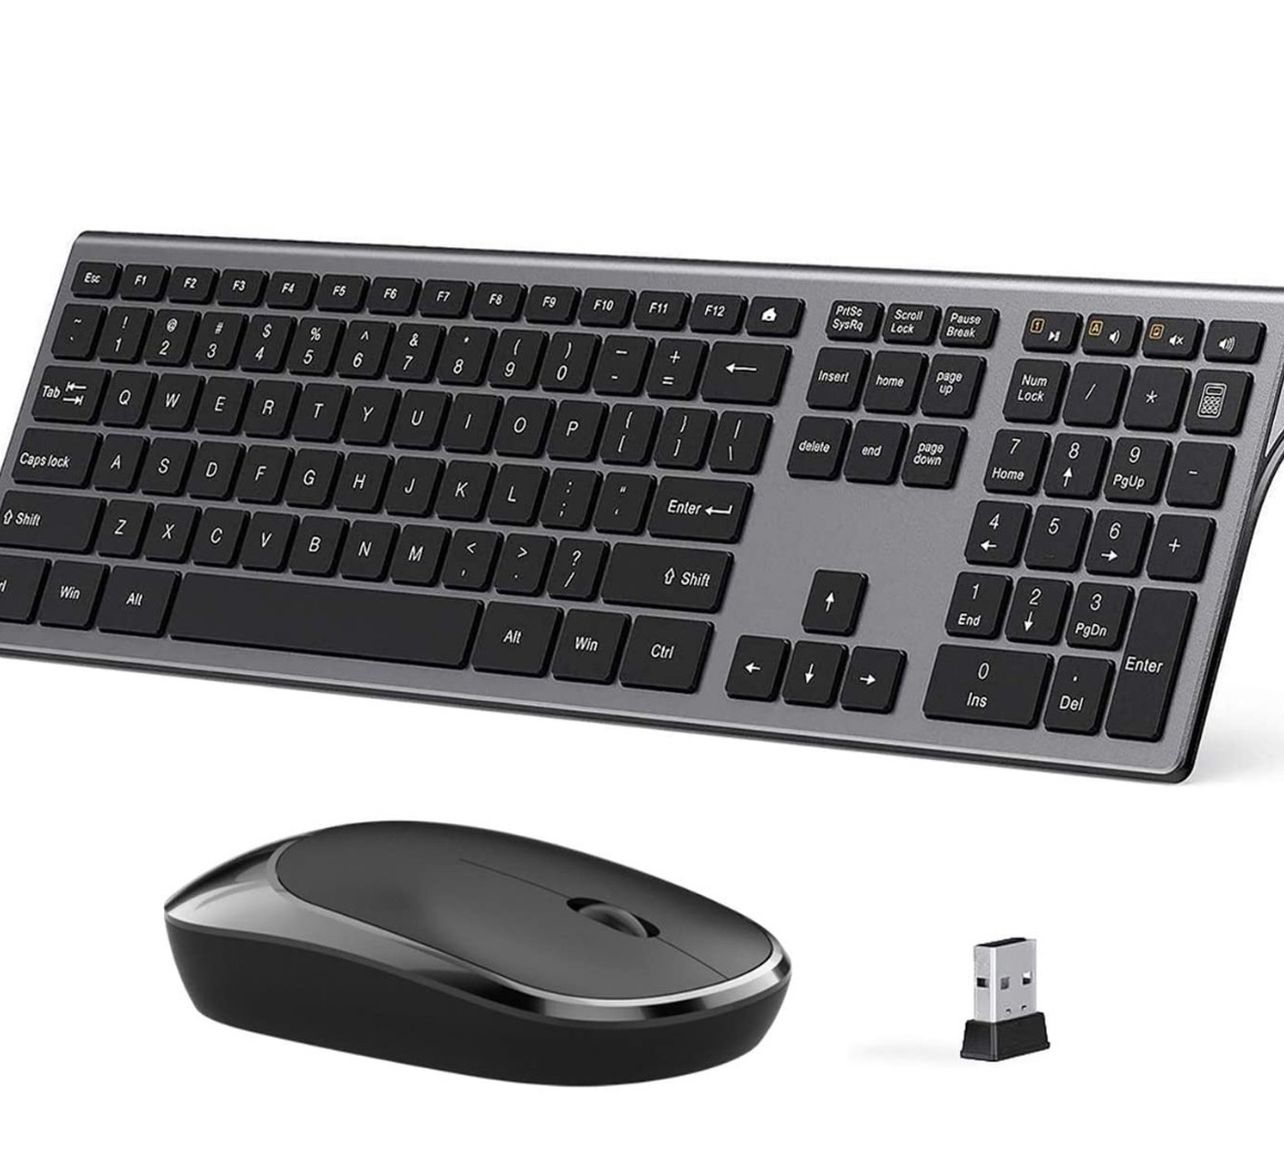 Rechargeable Wireless Keyboard Mouse Combo, Stylish Slim Keyboard and Mice - LEKVEY 2.4G 109 Keys Full-Size Quiet Keyboard Mouse Set for Windows Compu